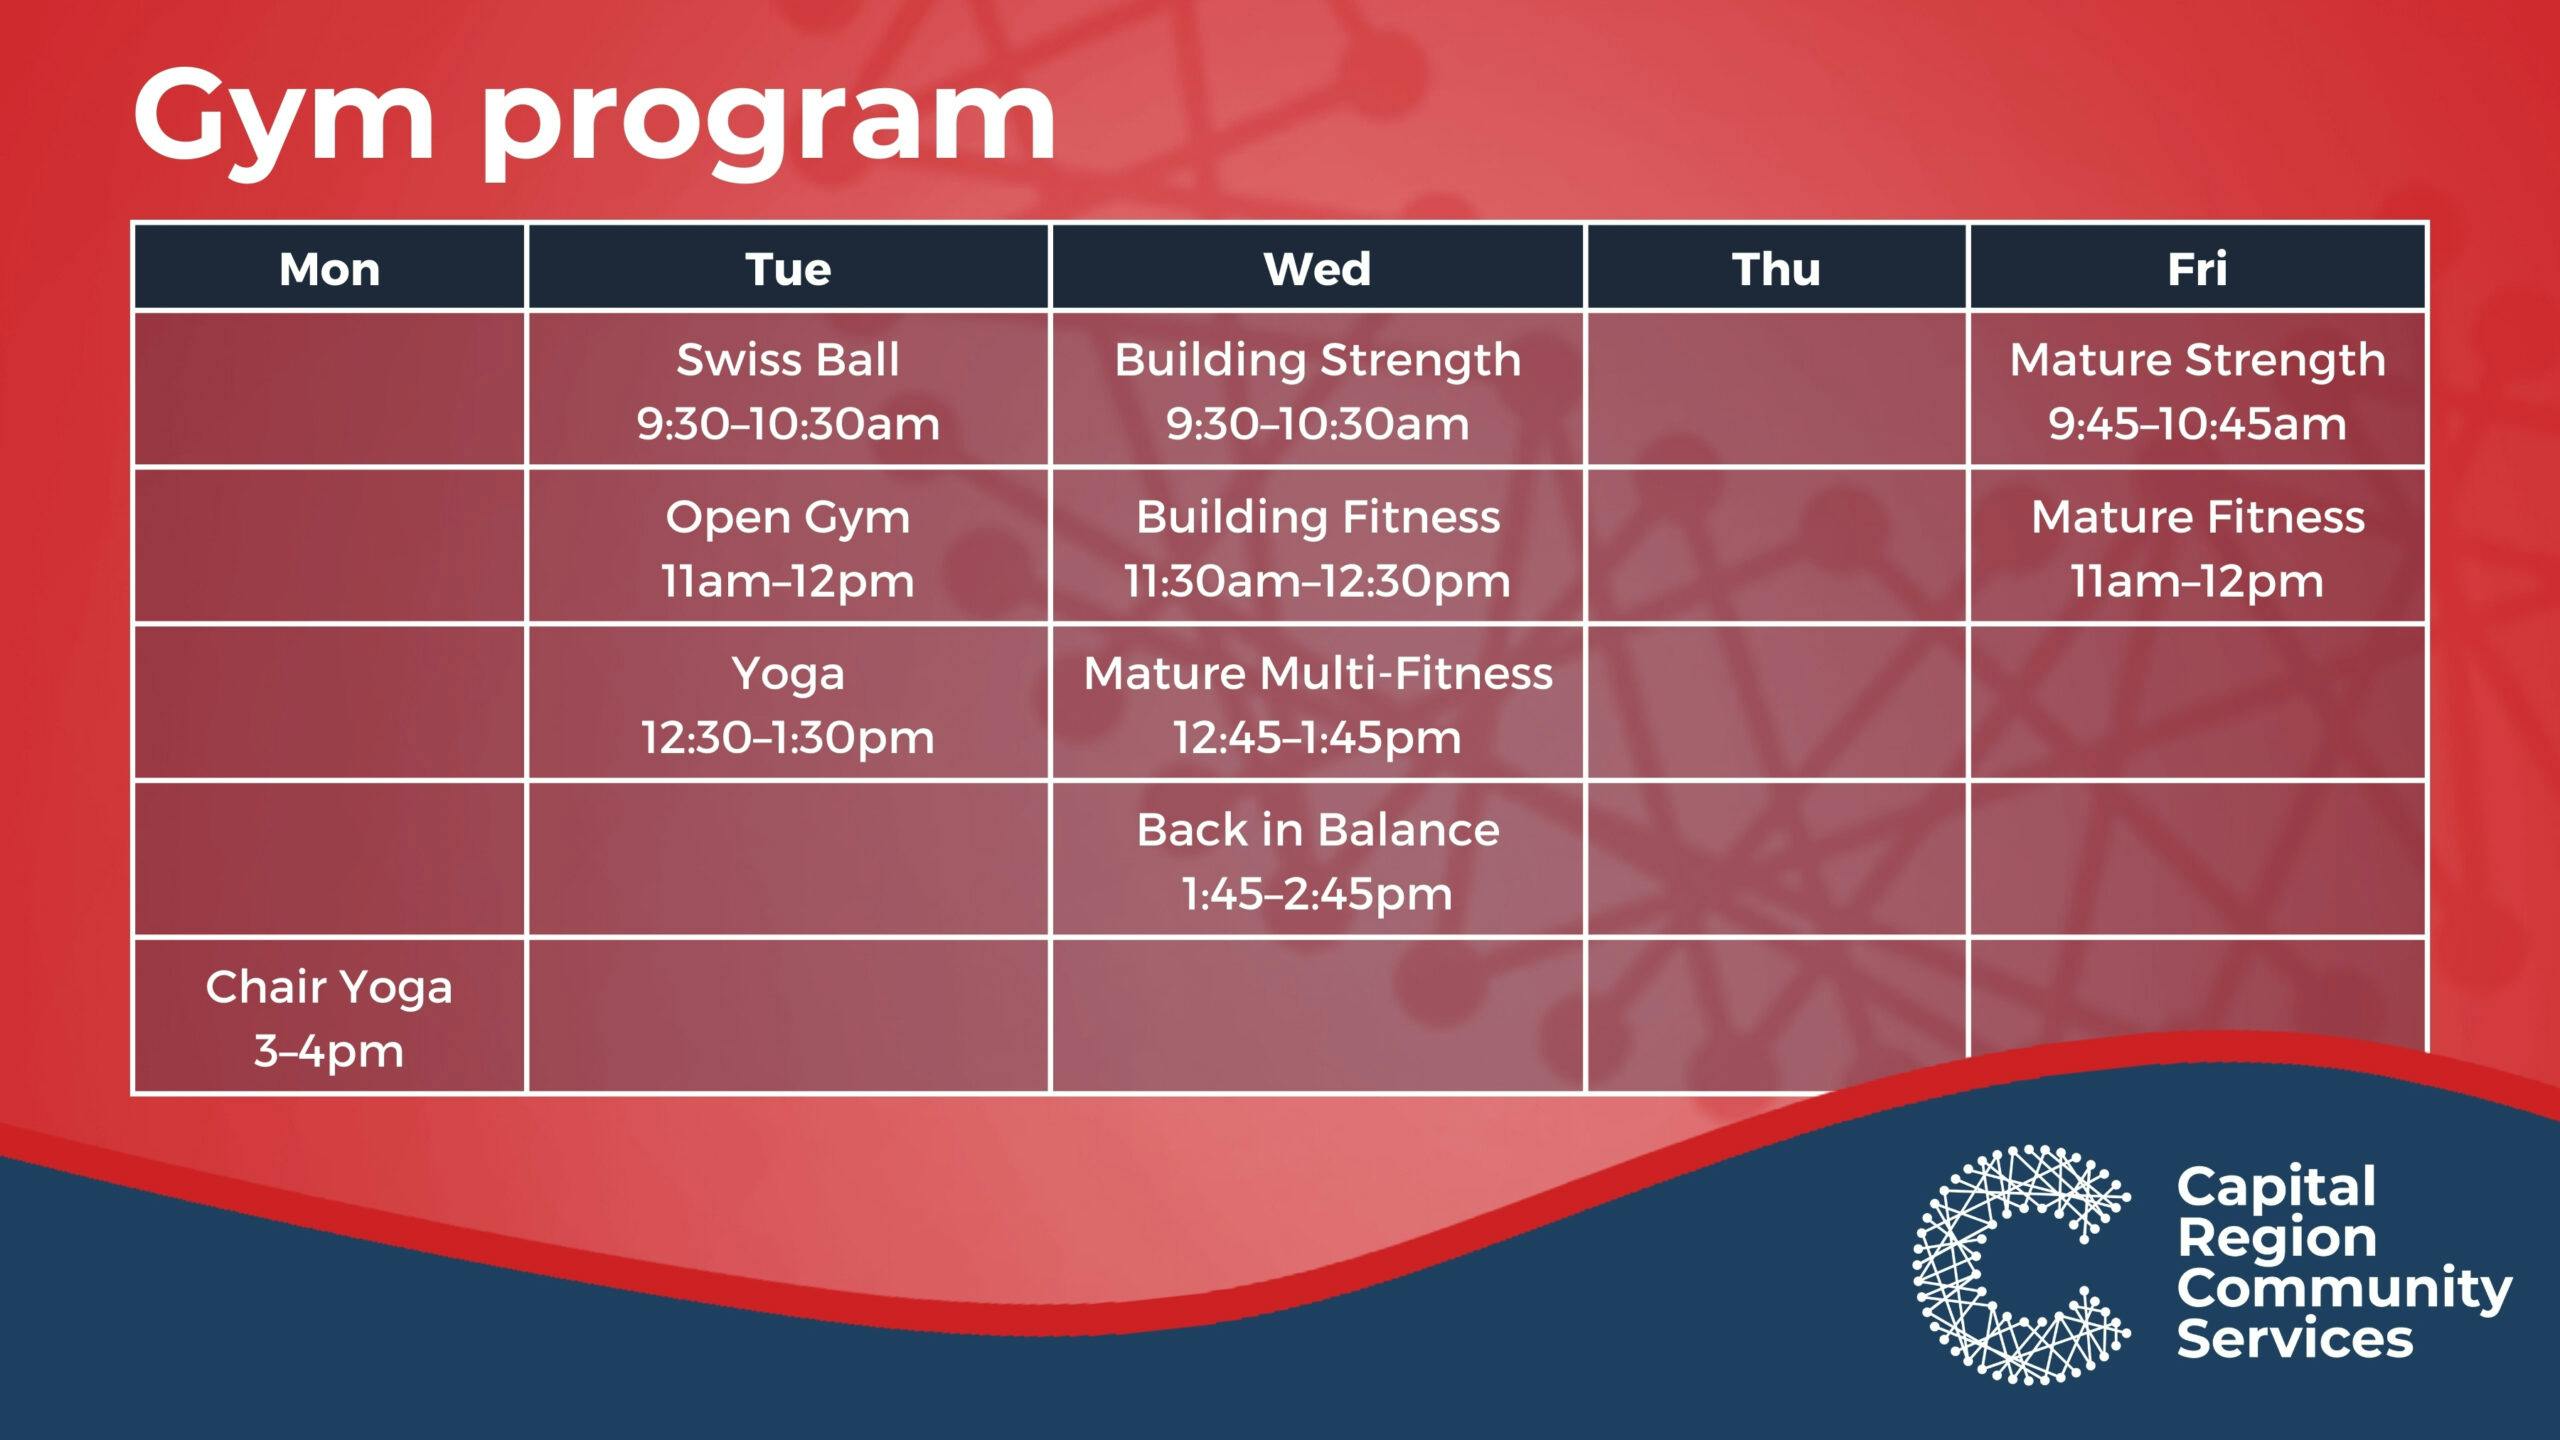 CRCS gym program.